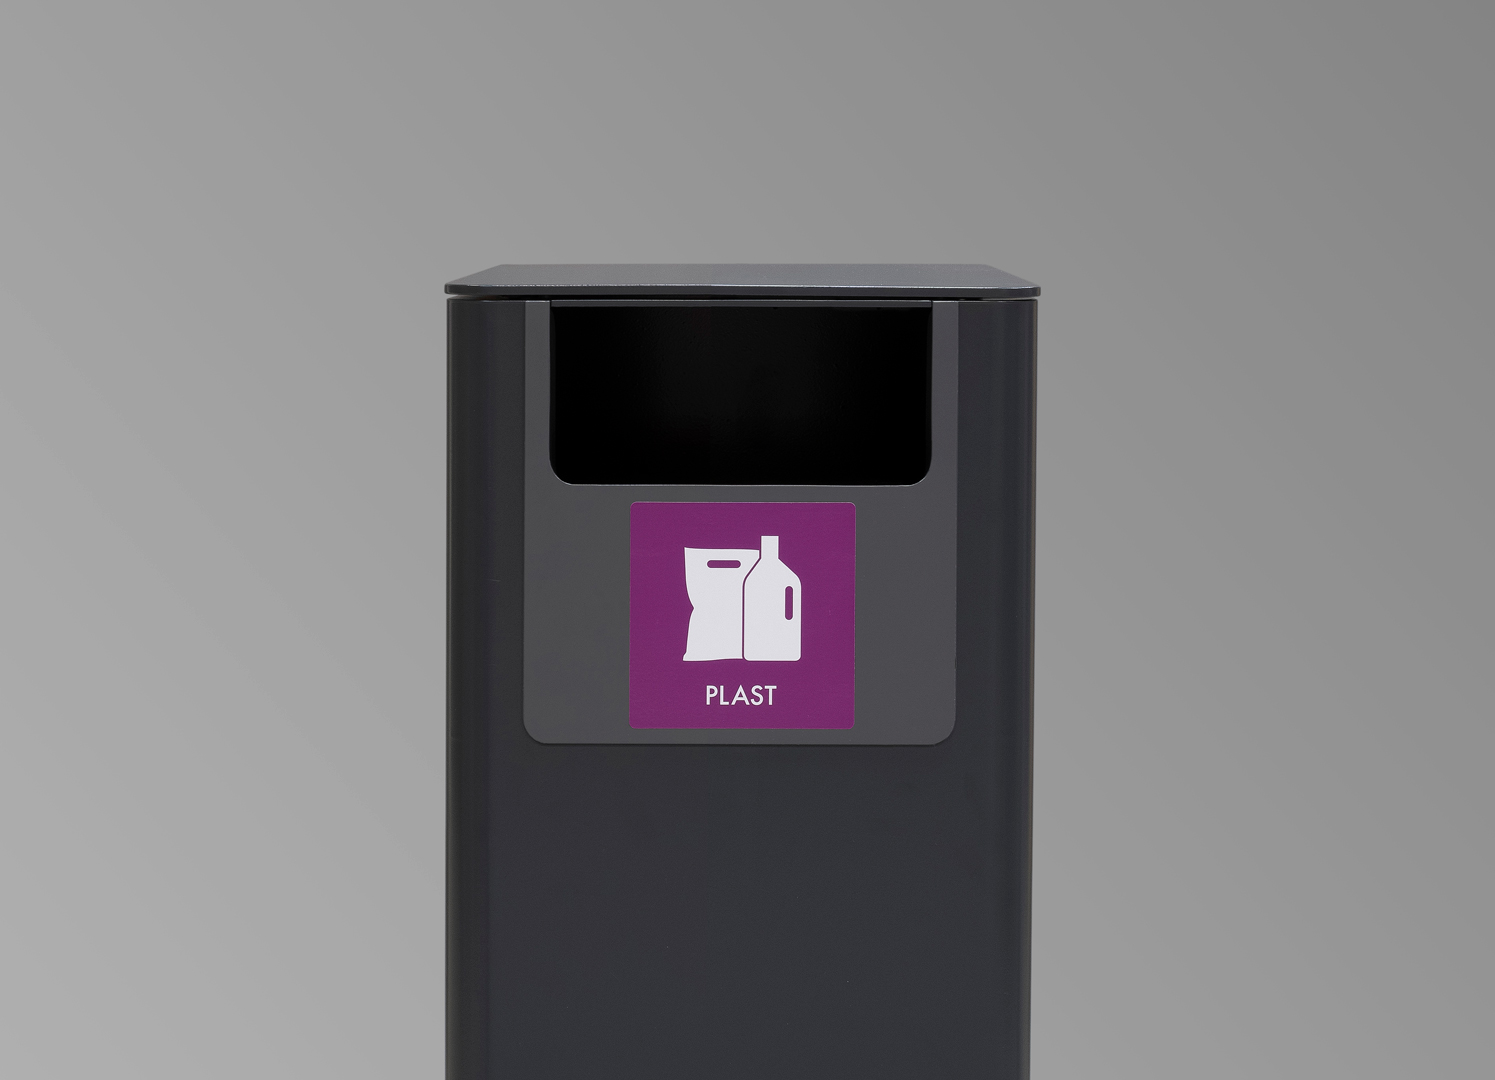 Litter bin for waste sorting in public spaces